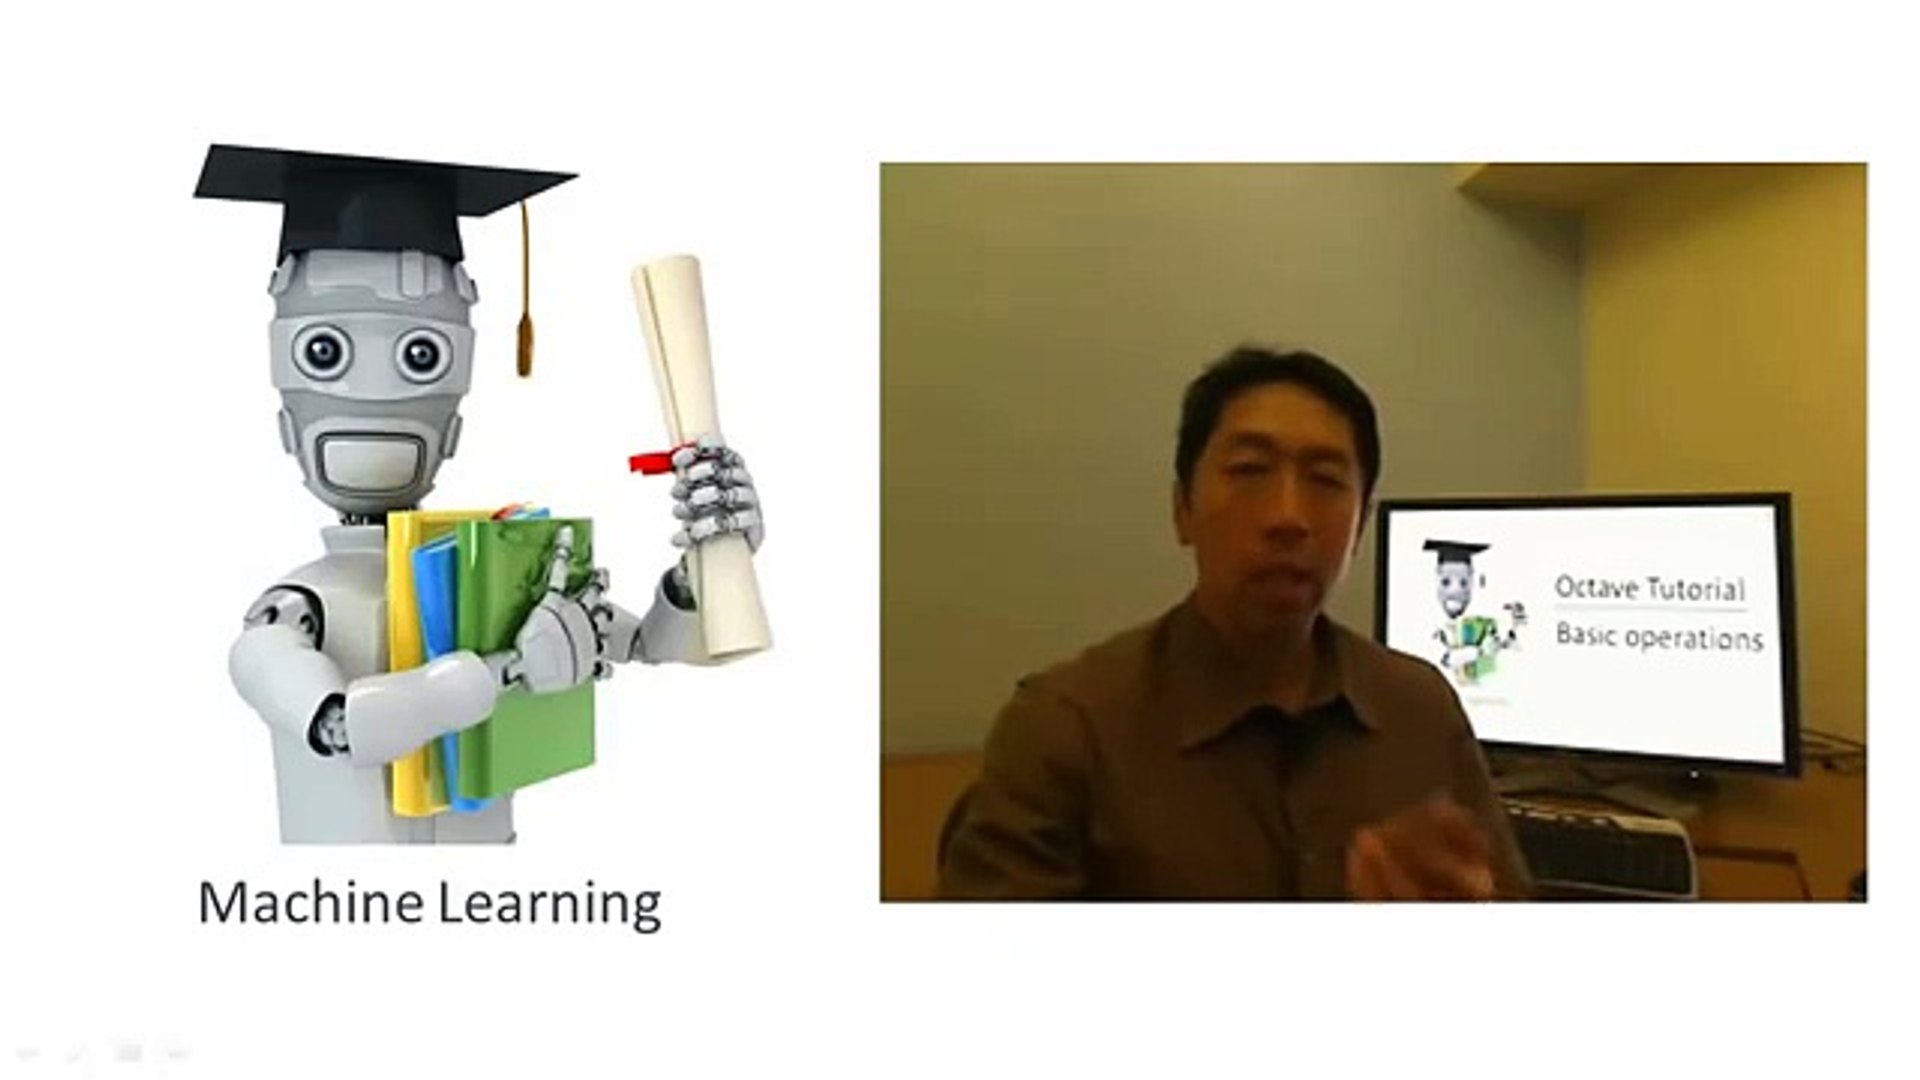 05.1-OctaveTutorial-BasicOperations- Machine Learning - Professor Andrew Ng